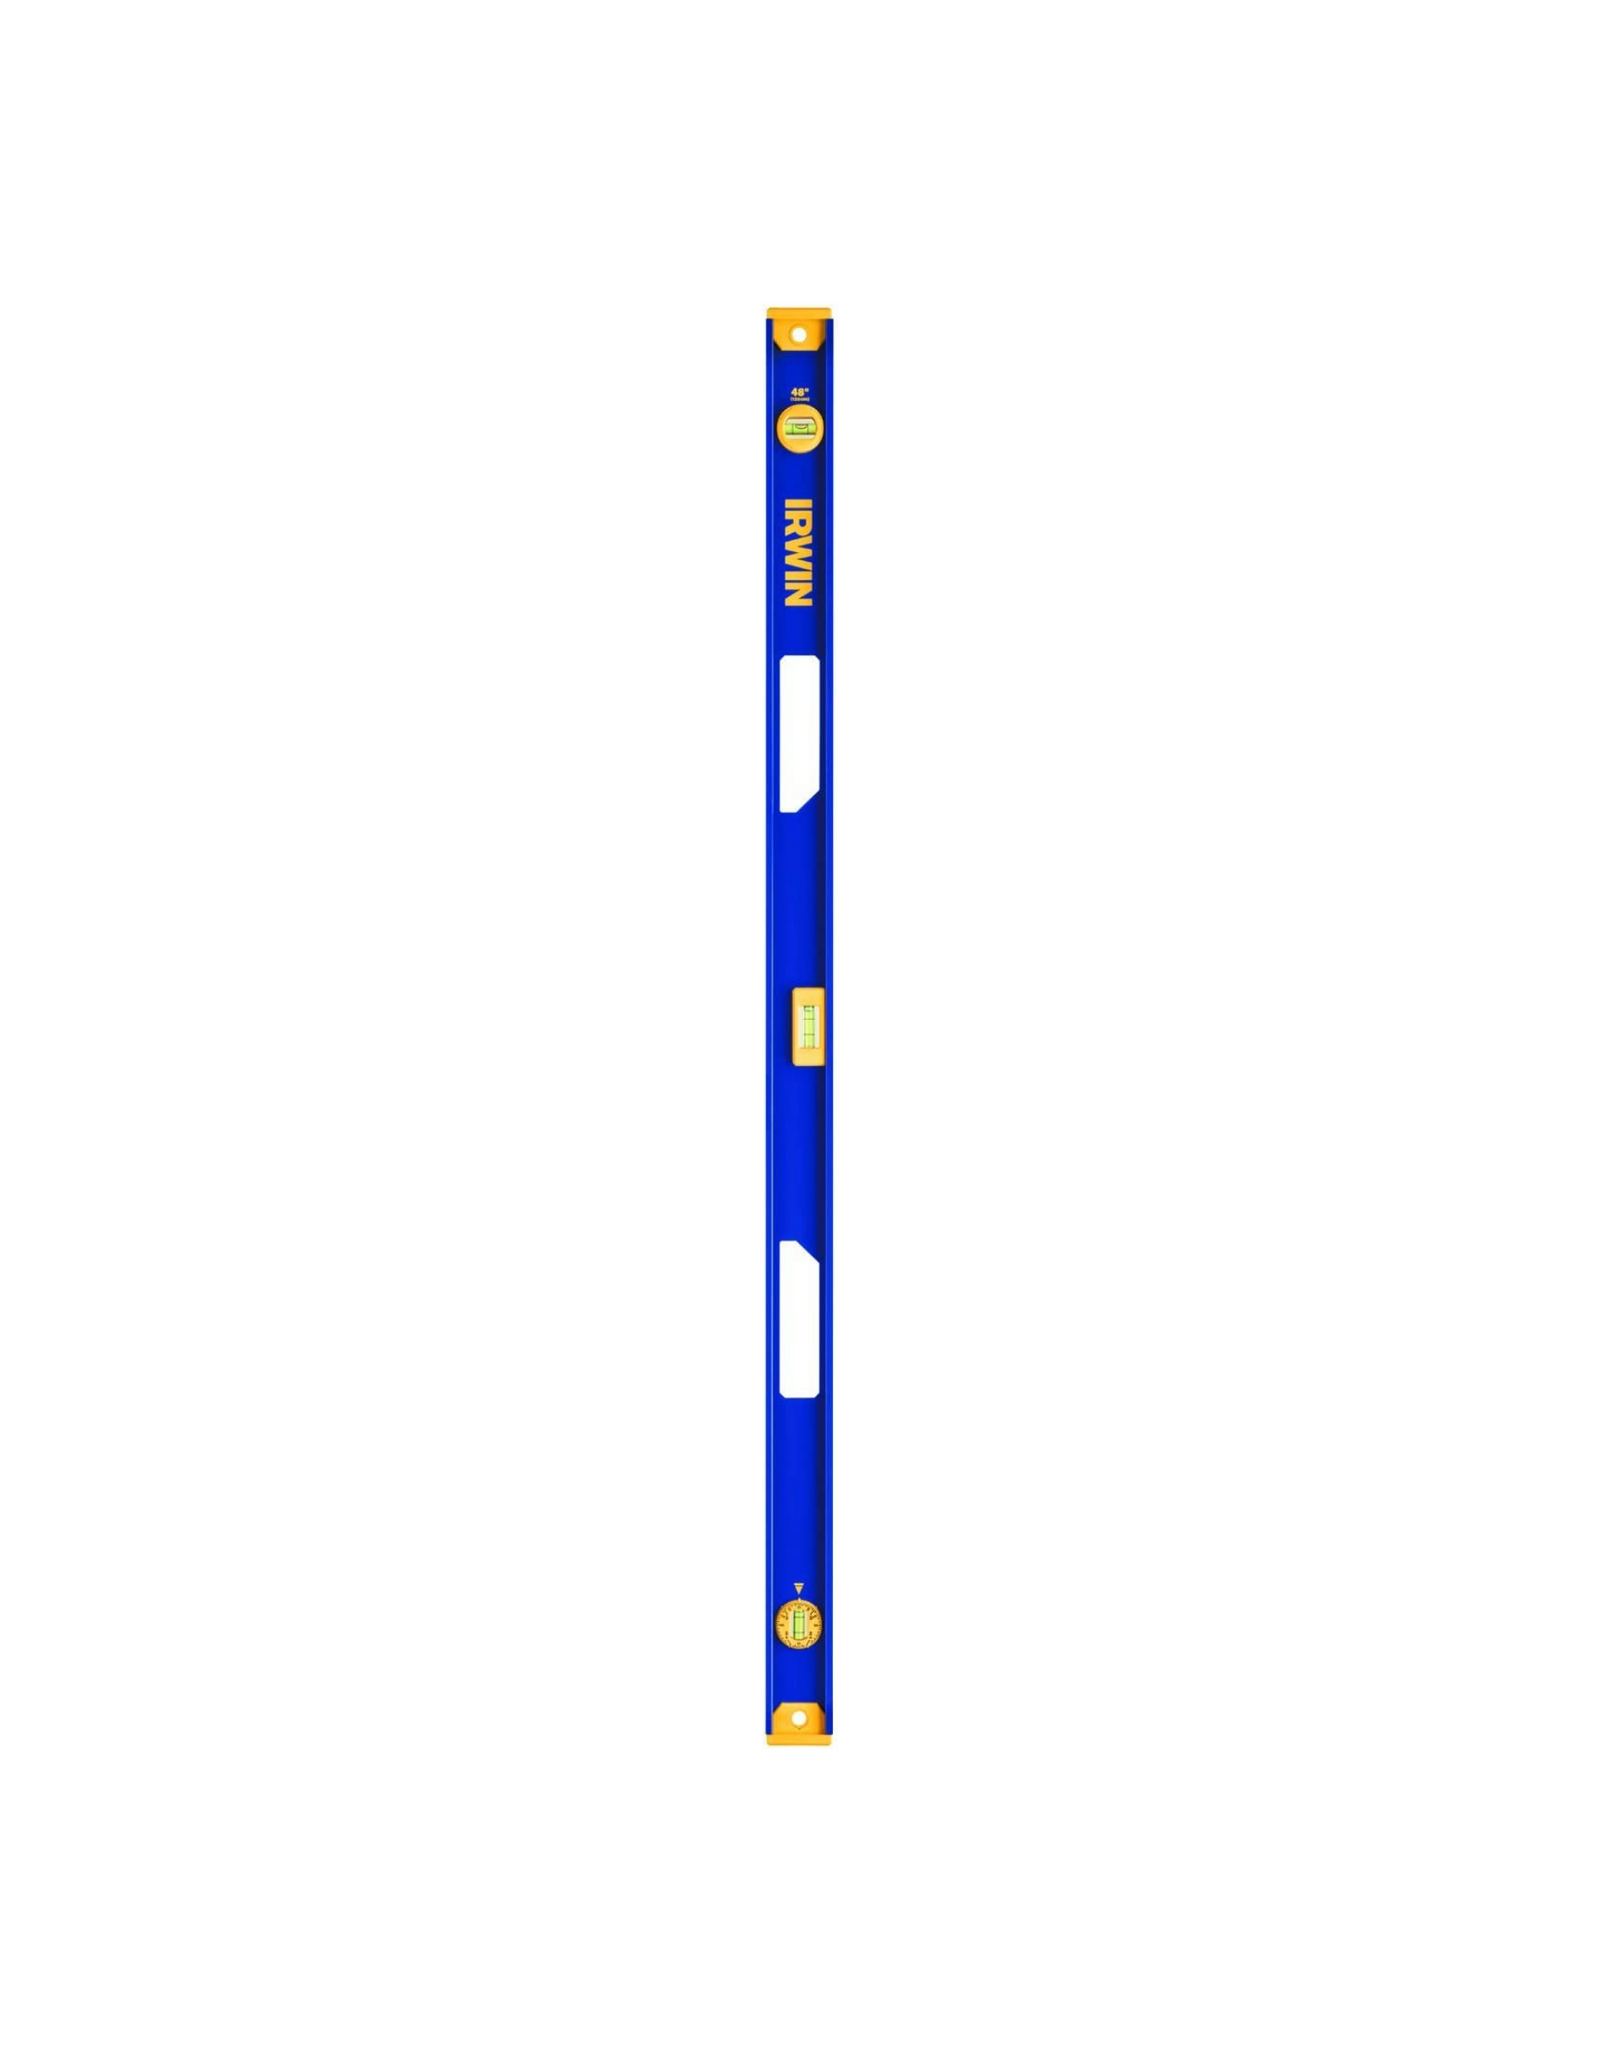 IRWIN Level, I-beam (1801094) 48 Inch, Blue